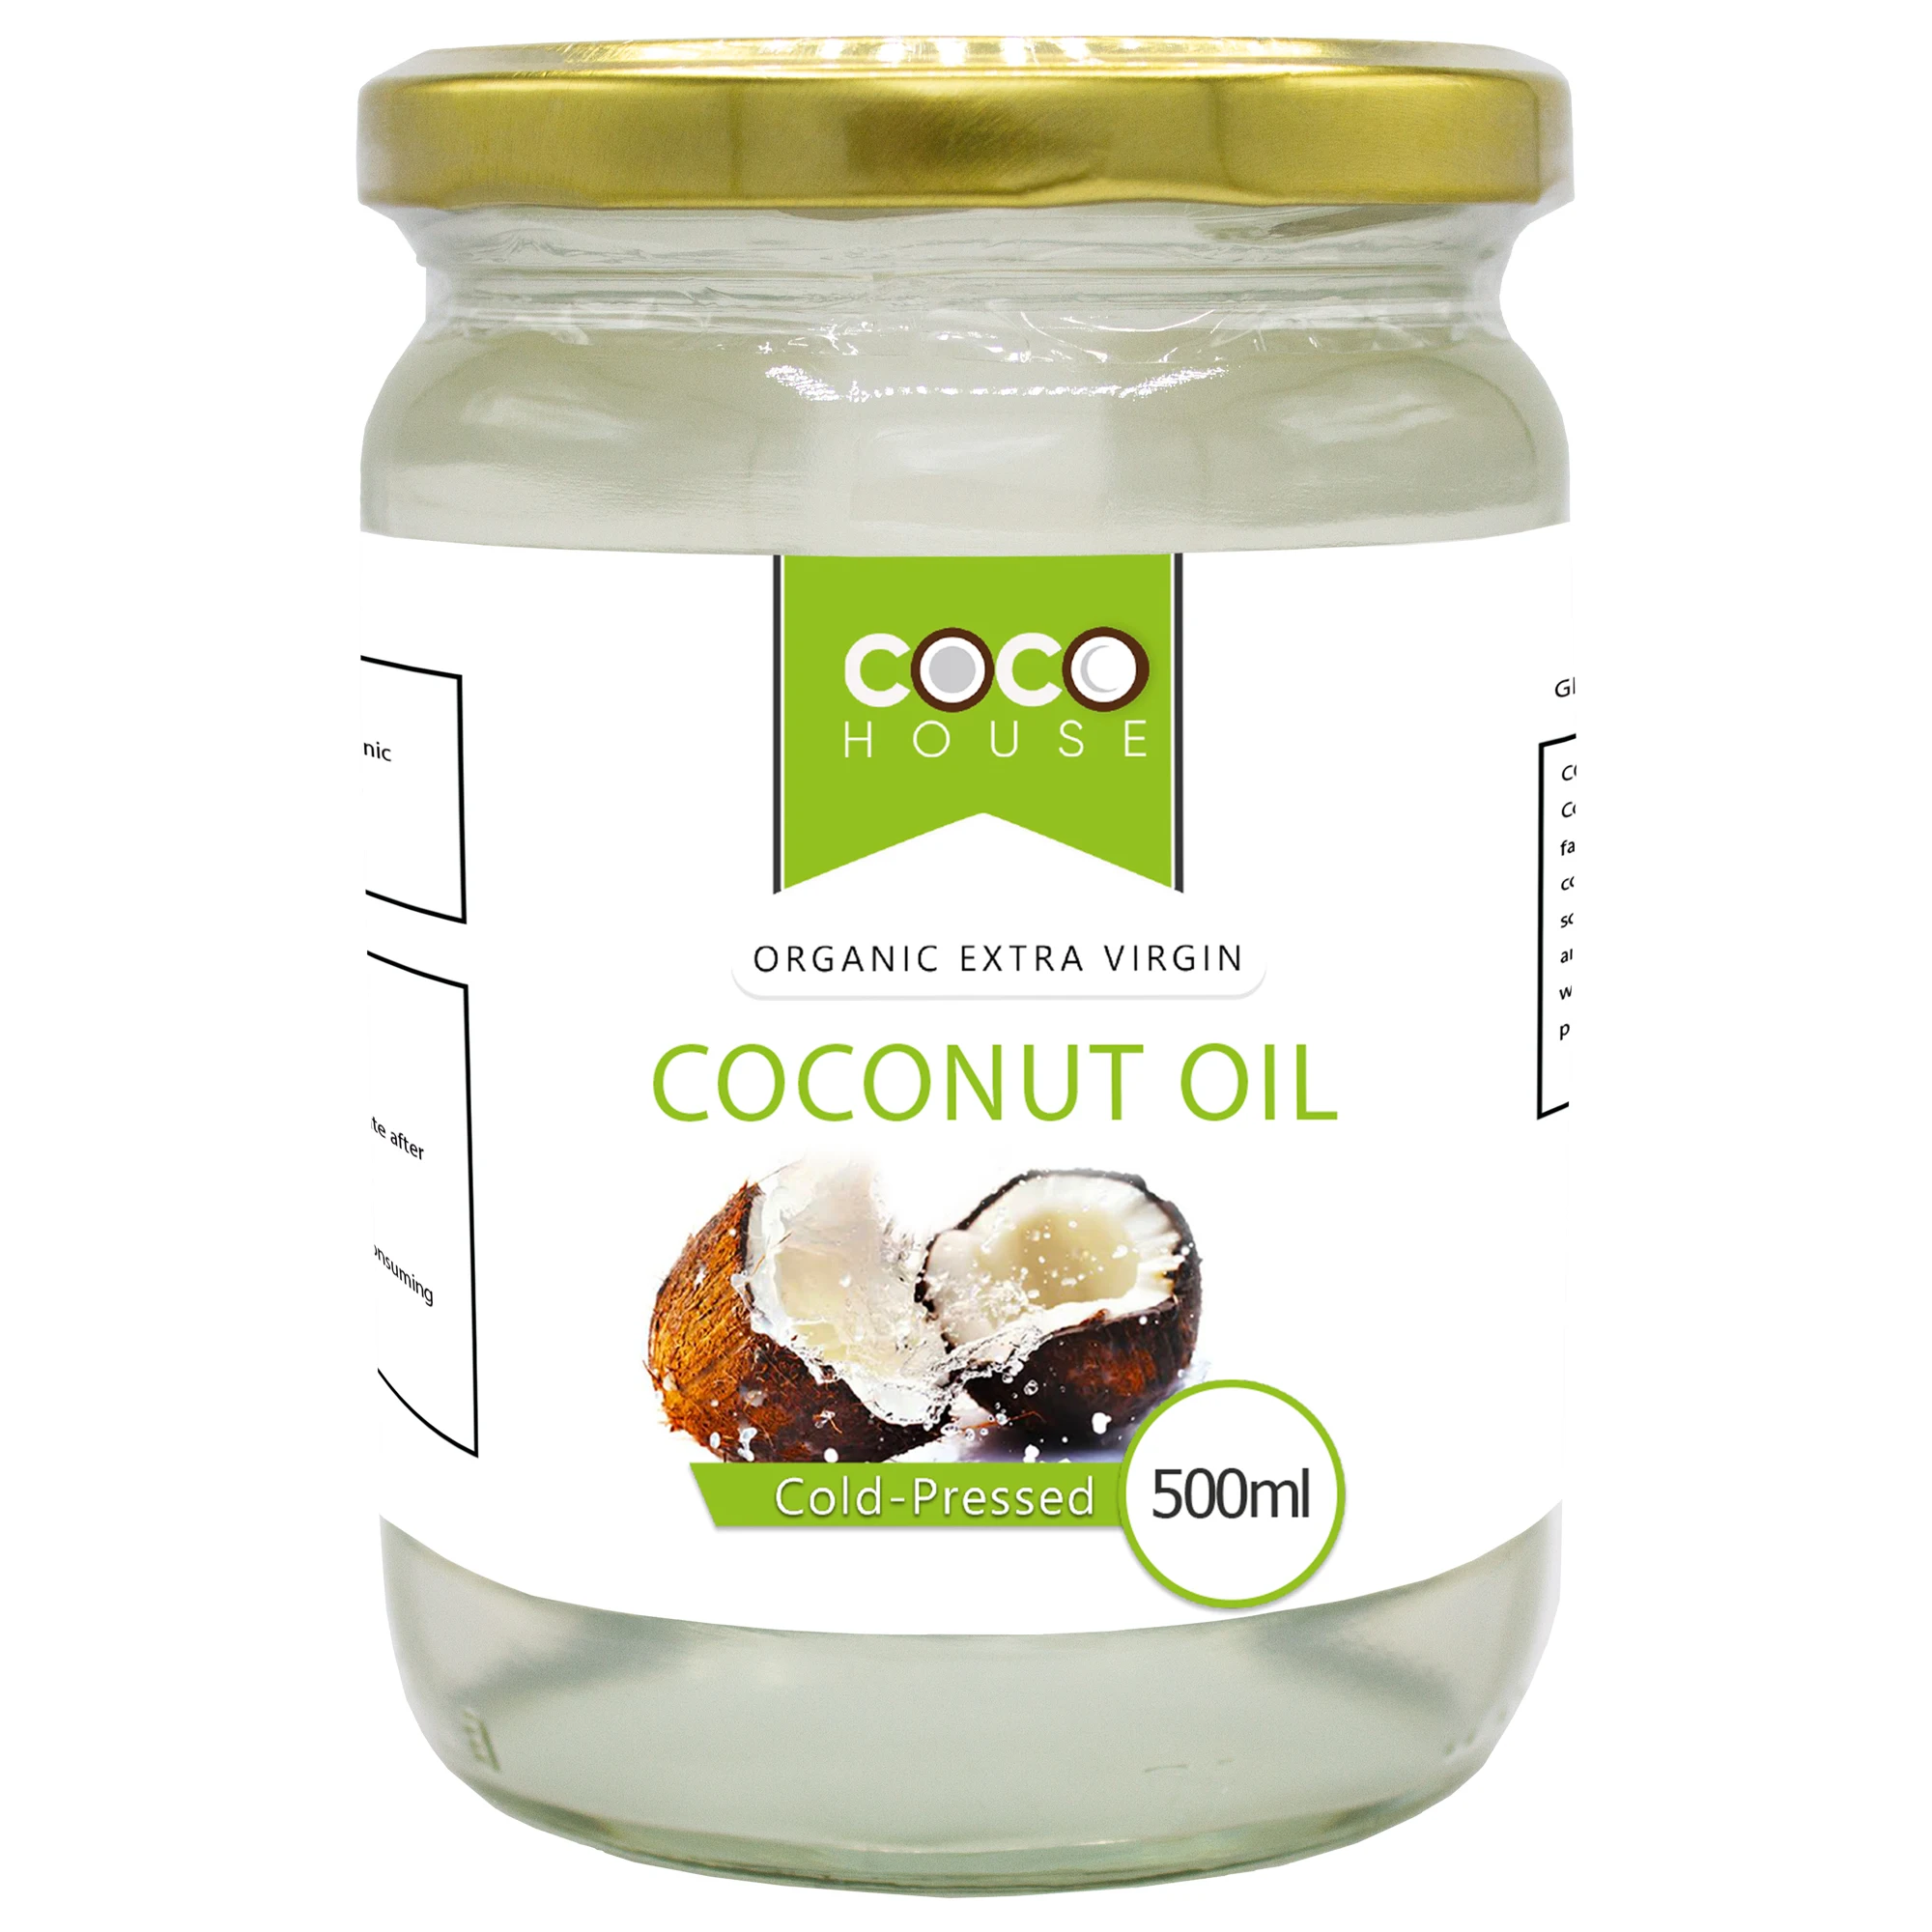 Coco House Organic Extra Virgin Coconut Oil 500ml Glass Jar